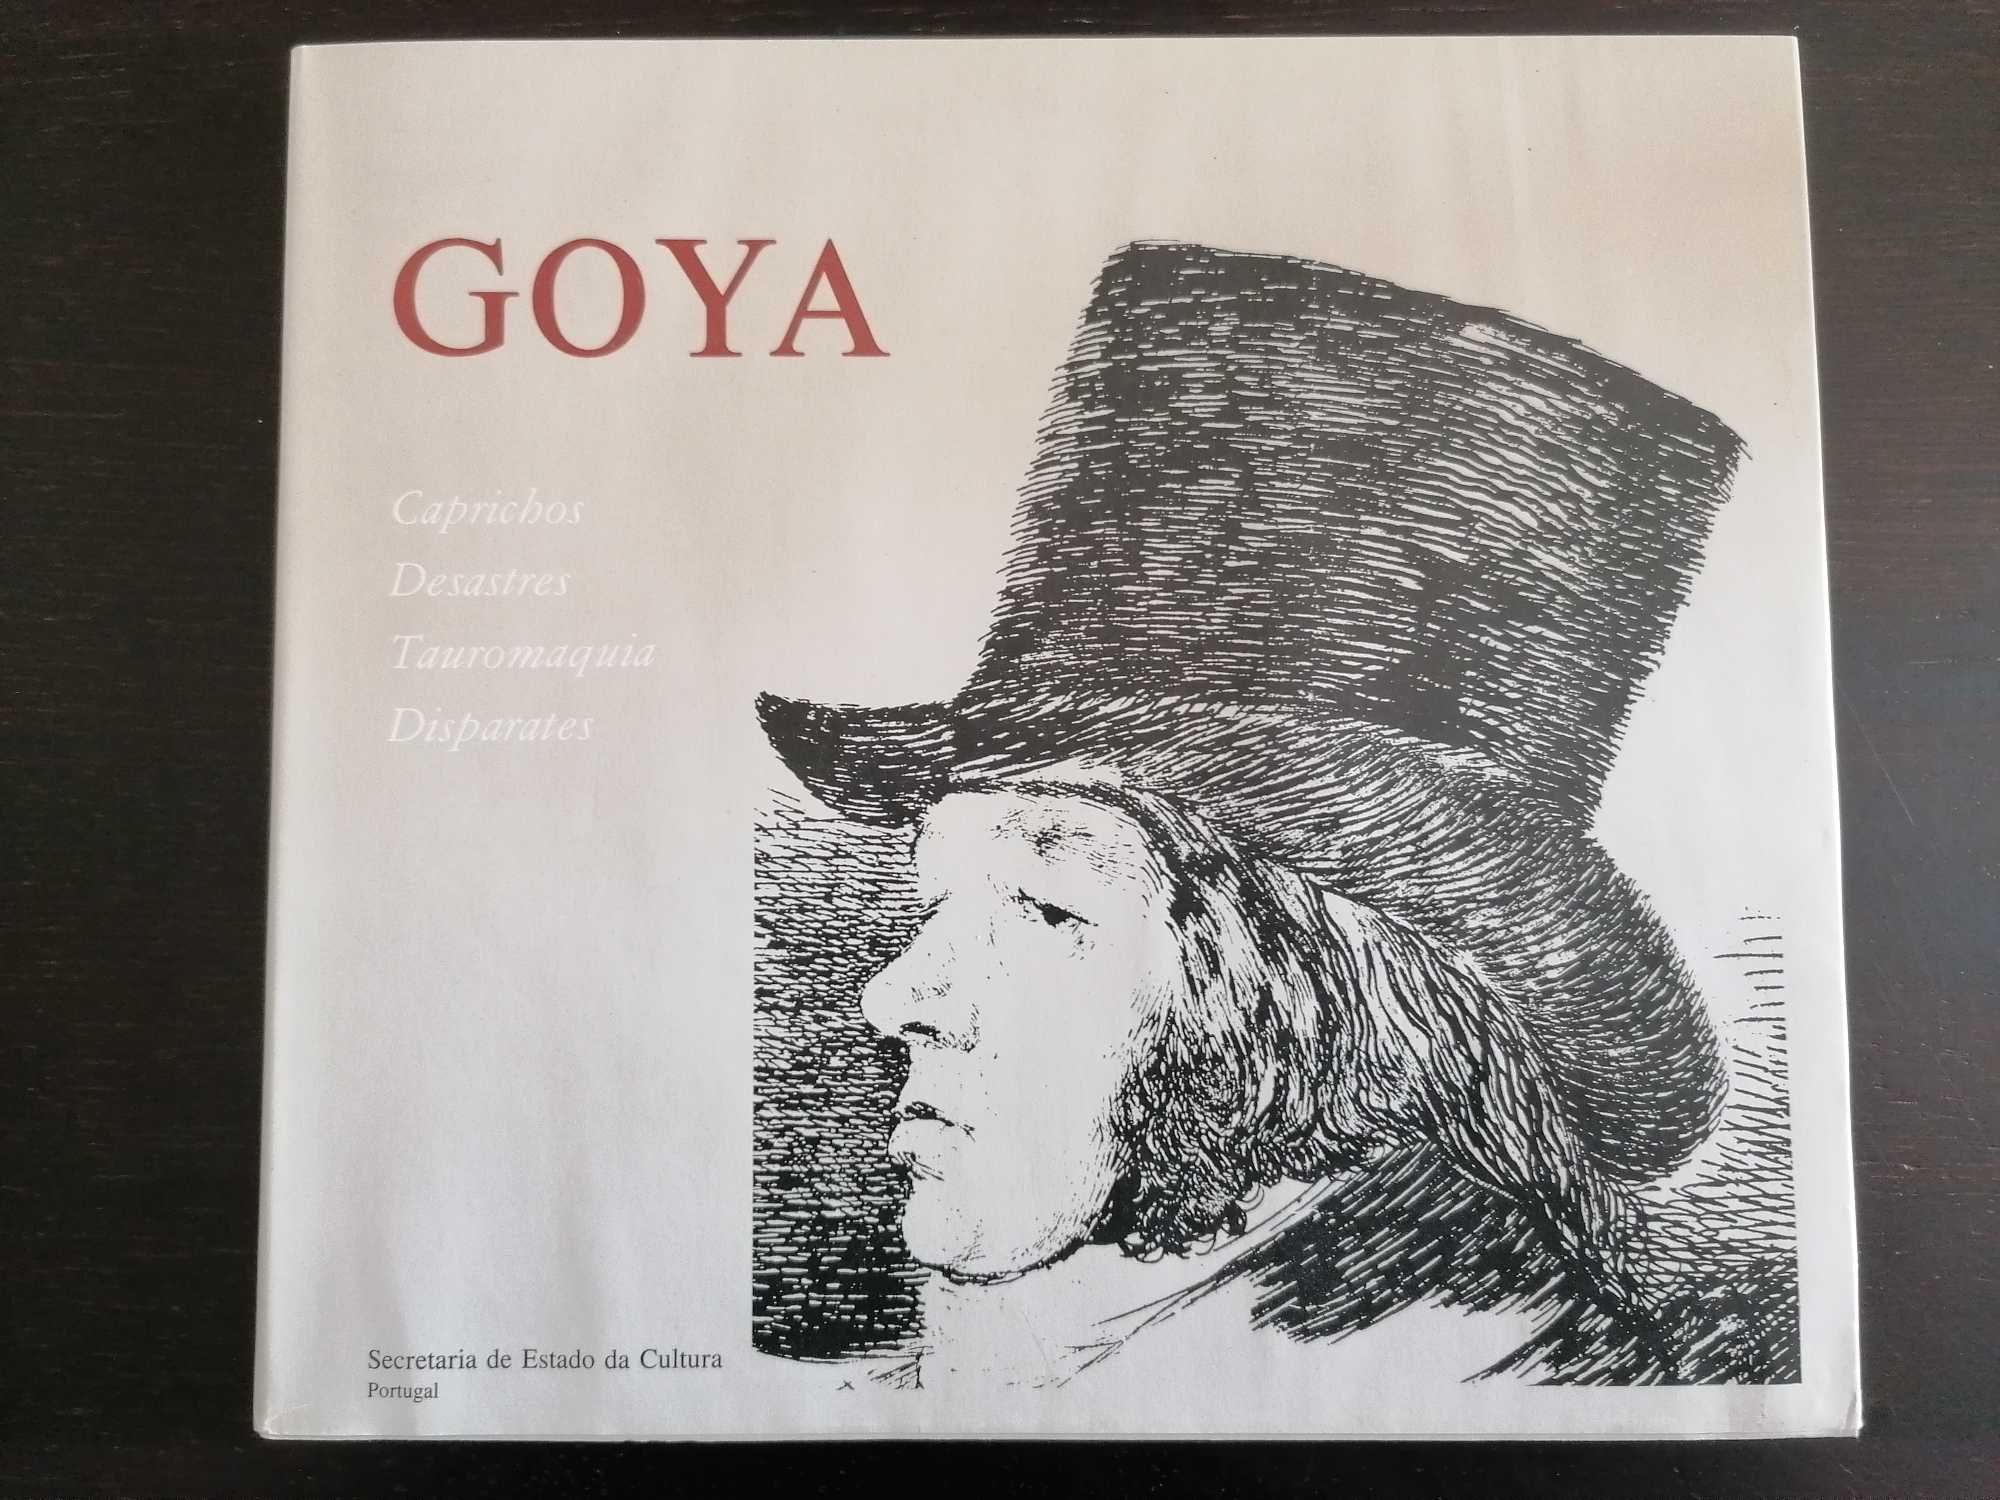 Goya // Caprichos-Desastres-Tauromaquias-Disparates